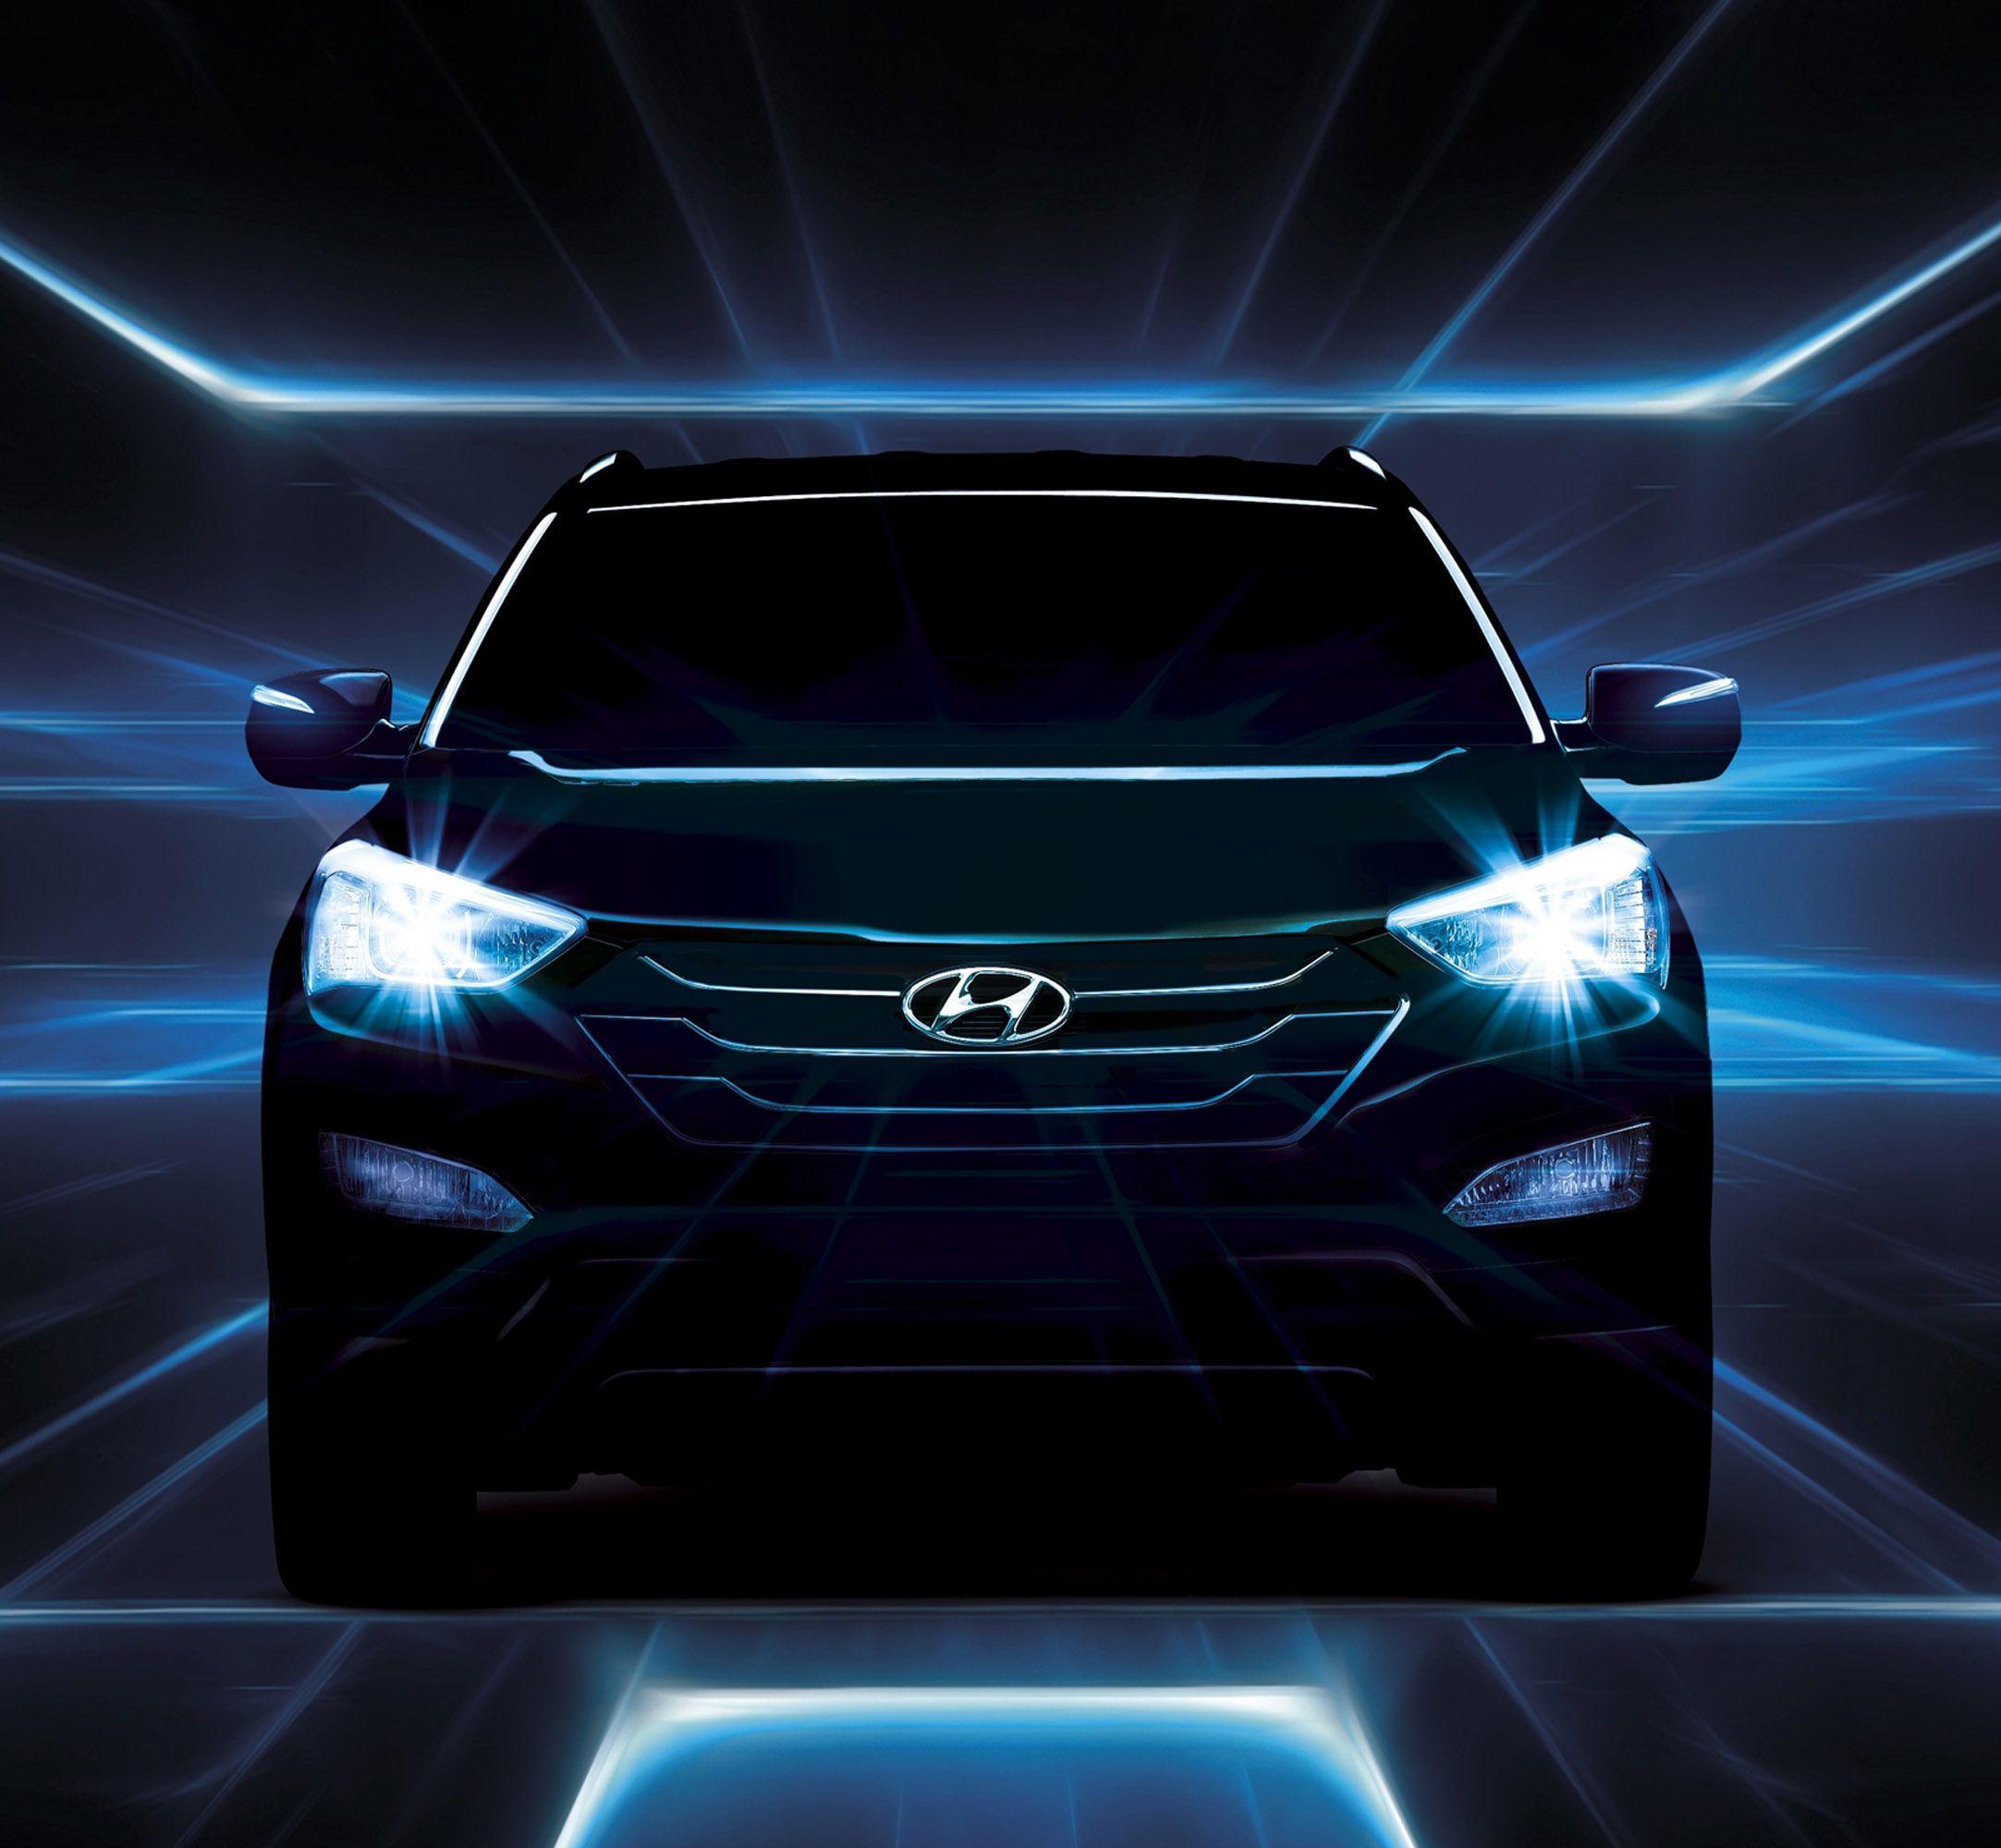 New Teaser Image of 2013 Hyundai Santa Fe